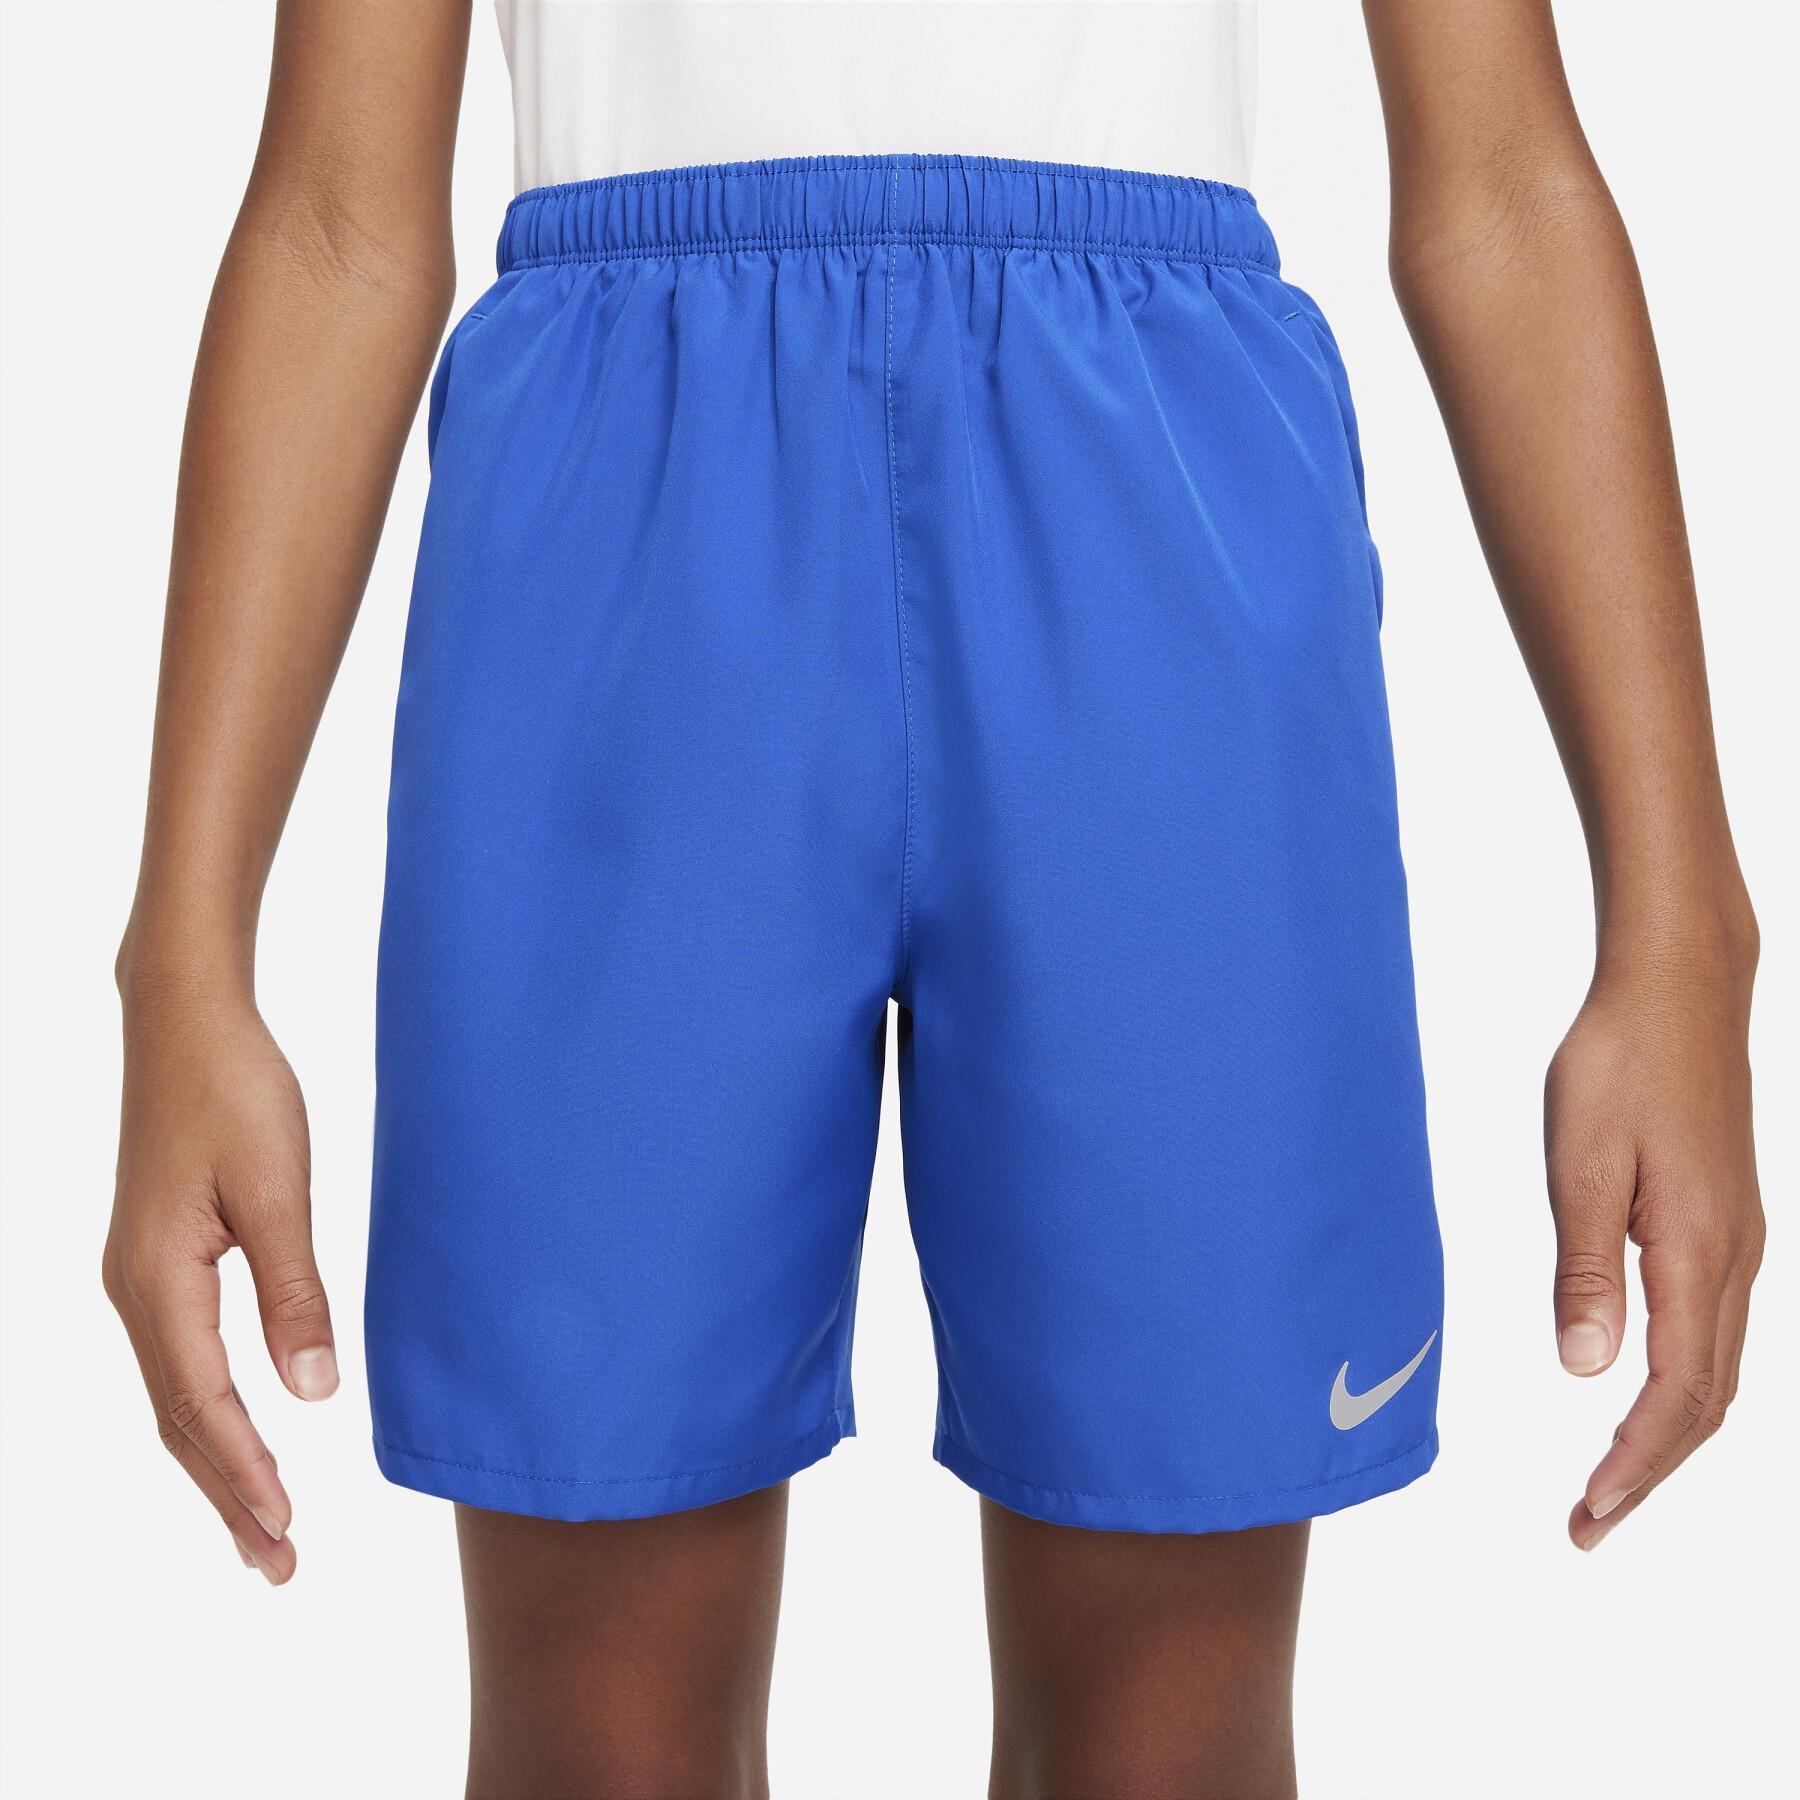 Pantalones cortos para niños Nike Challenger